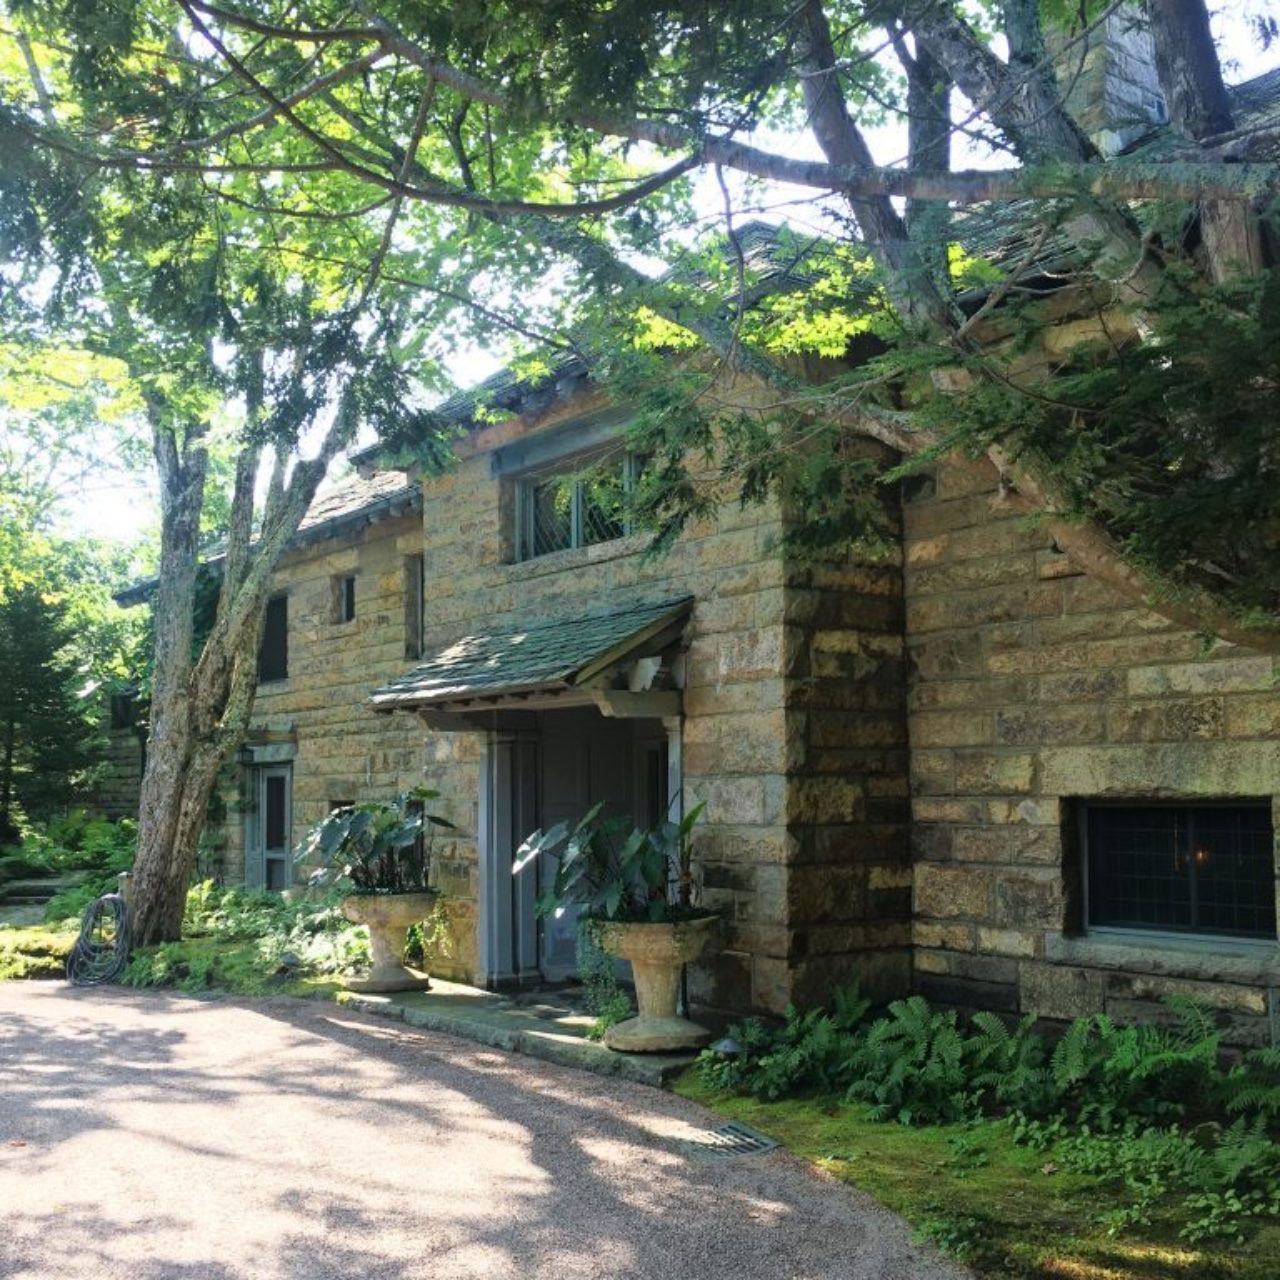 Skylands, the private home of Martha Stewart, designed originally for Edsel Ford by Duncan Candler